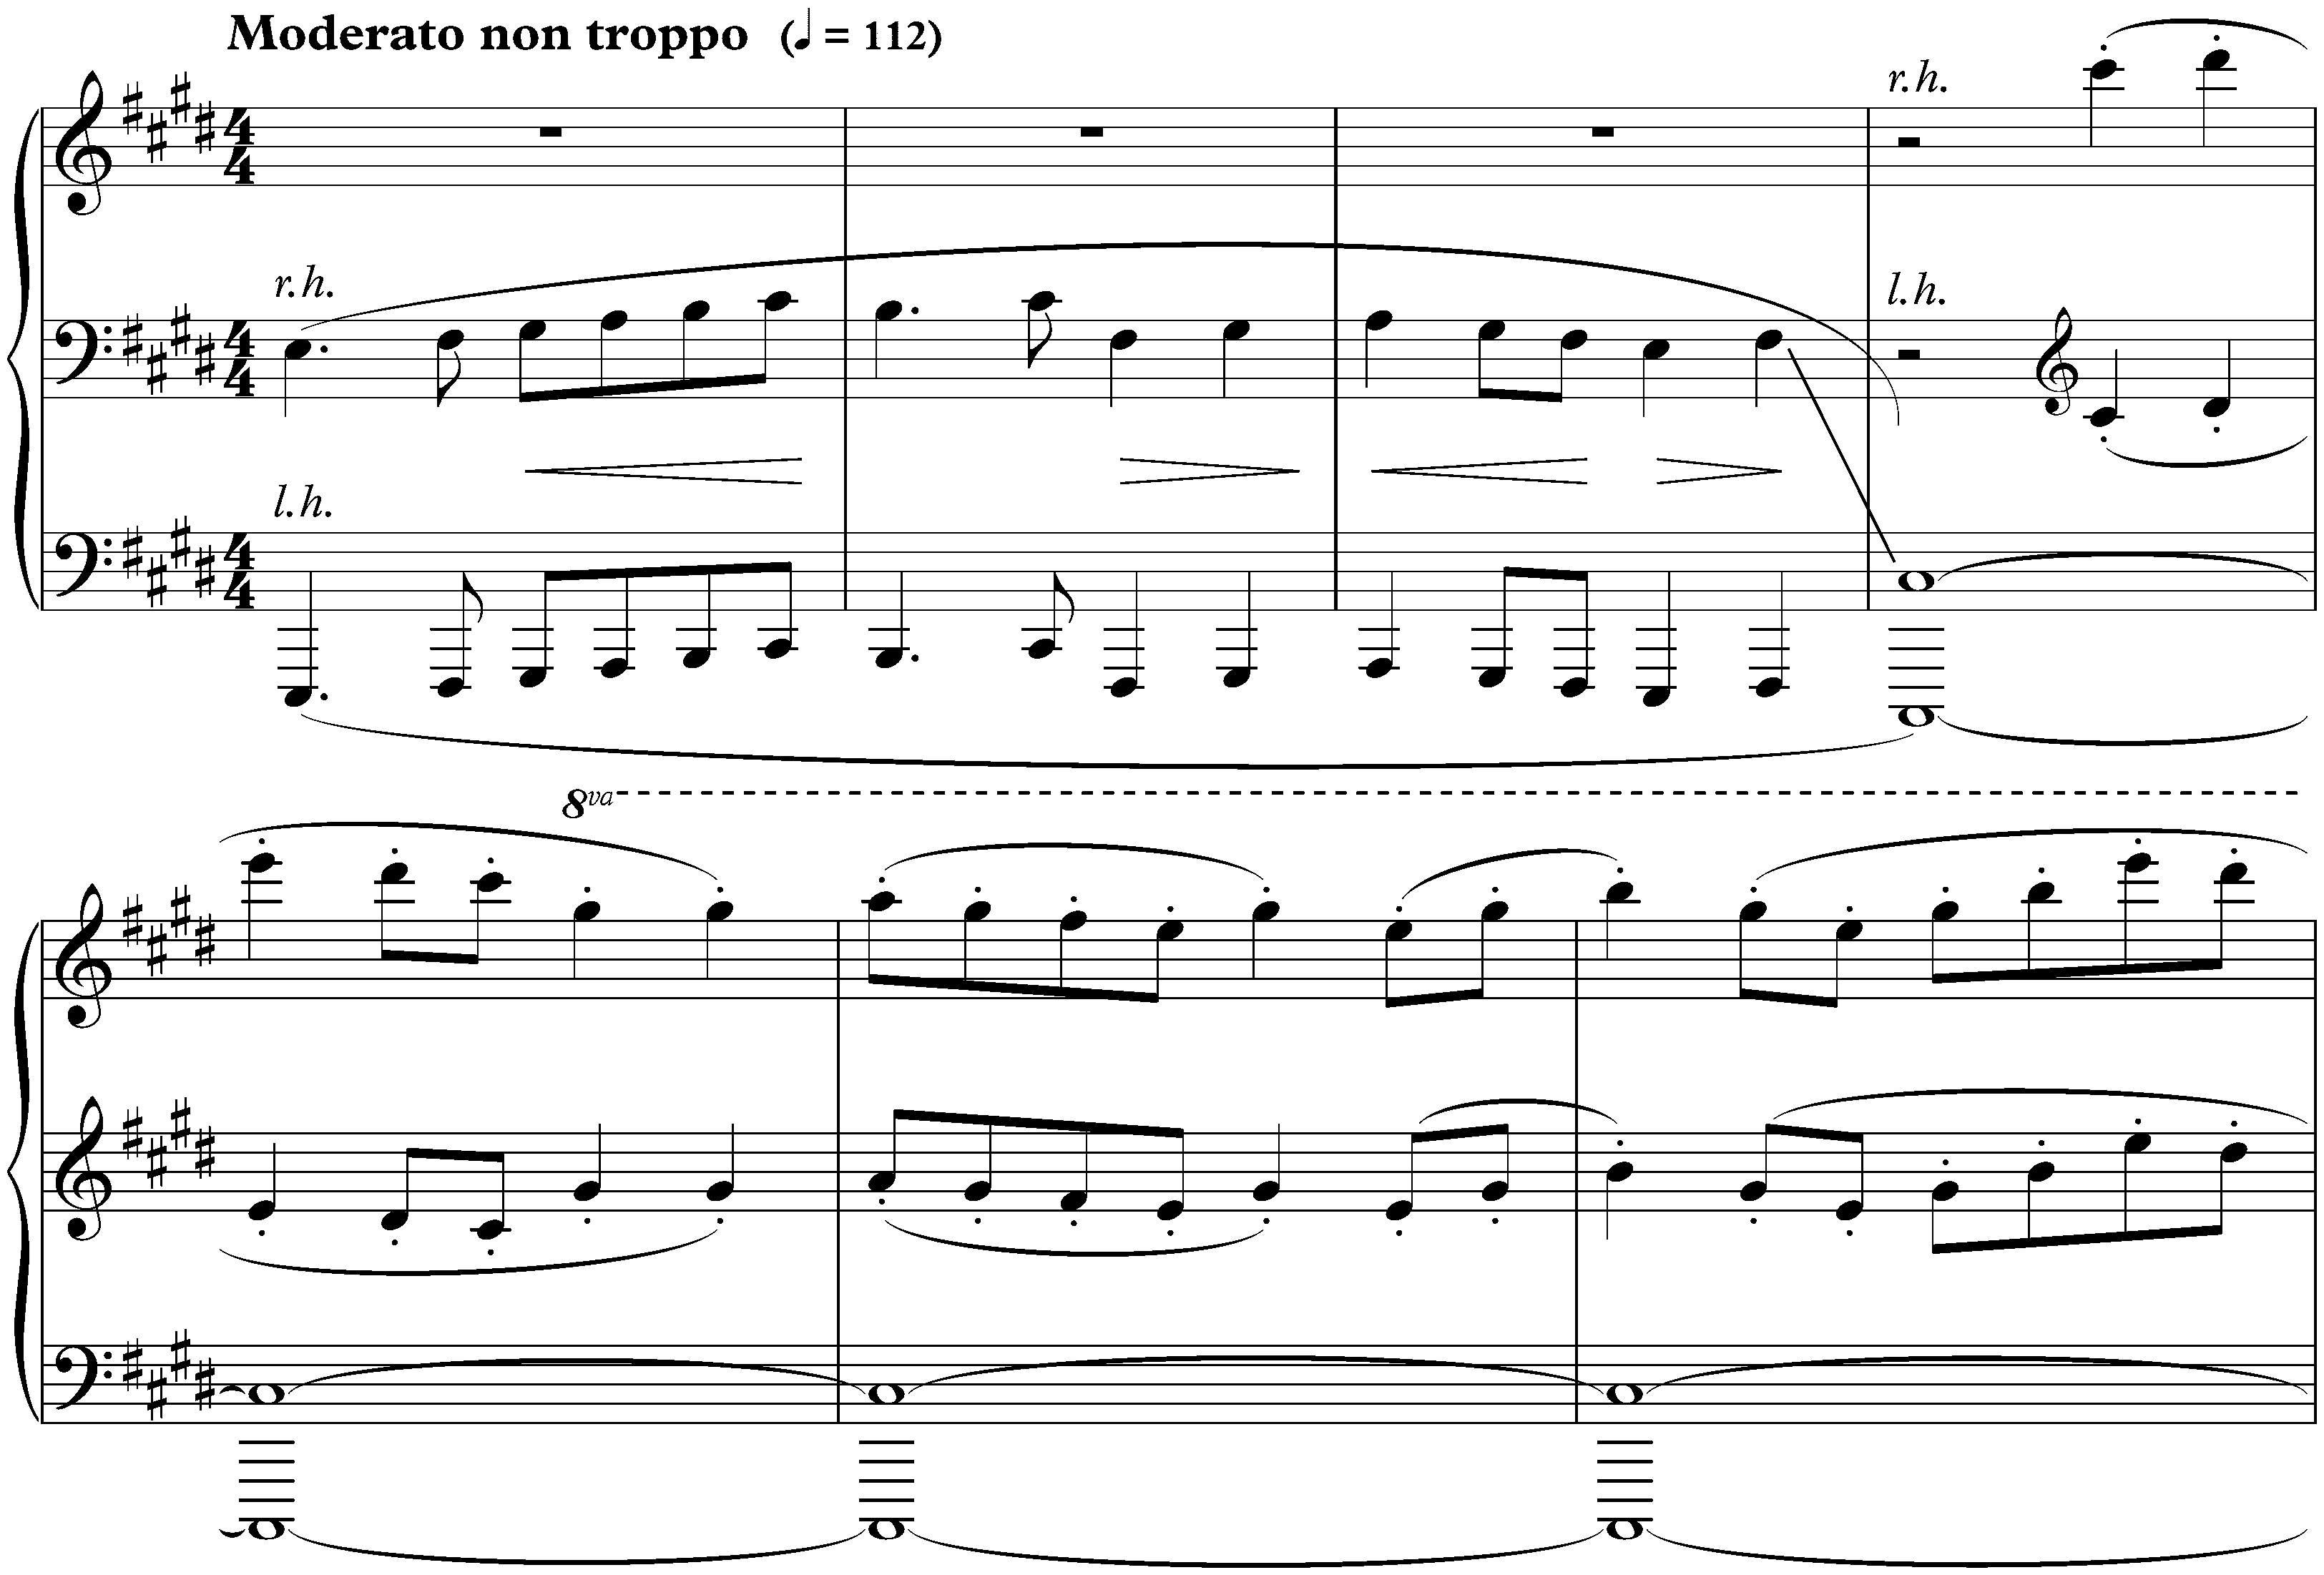 Twenty-four Preludes and Fugues, op. 87; 9. E major, Prelude